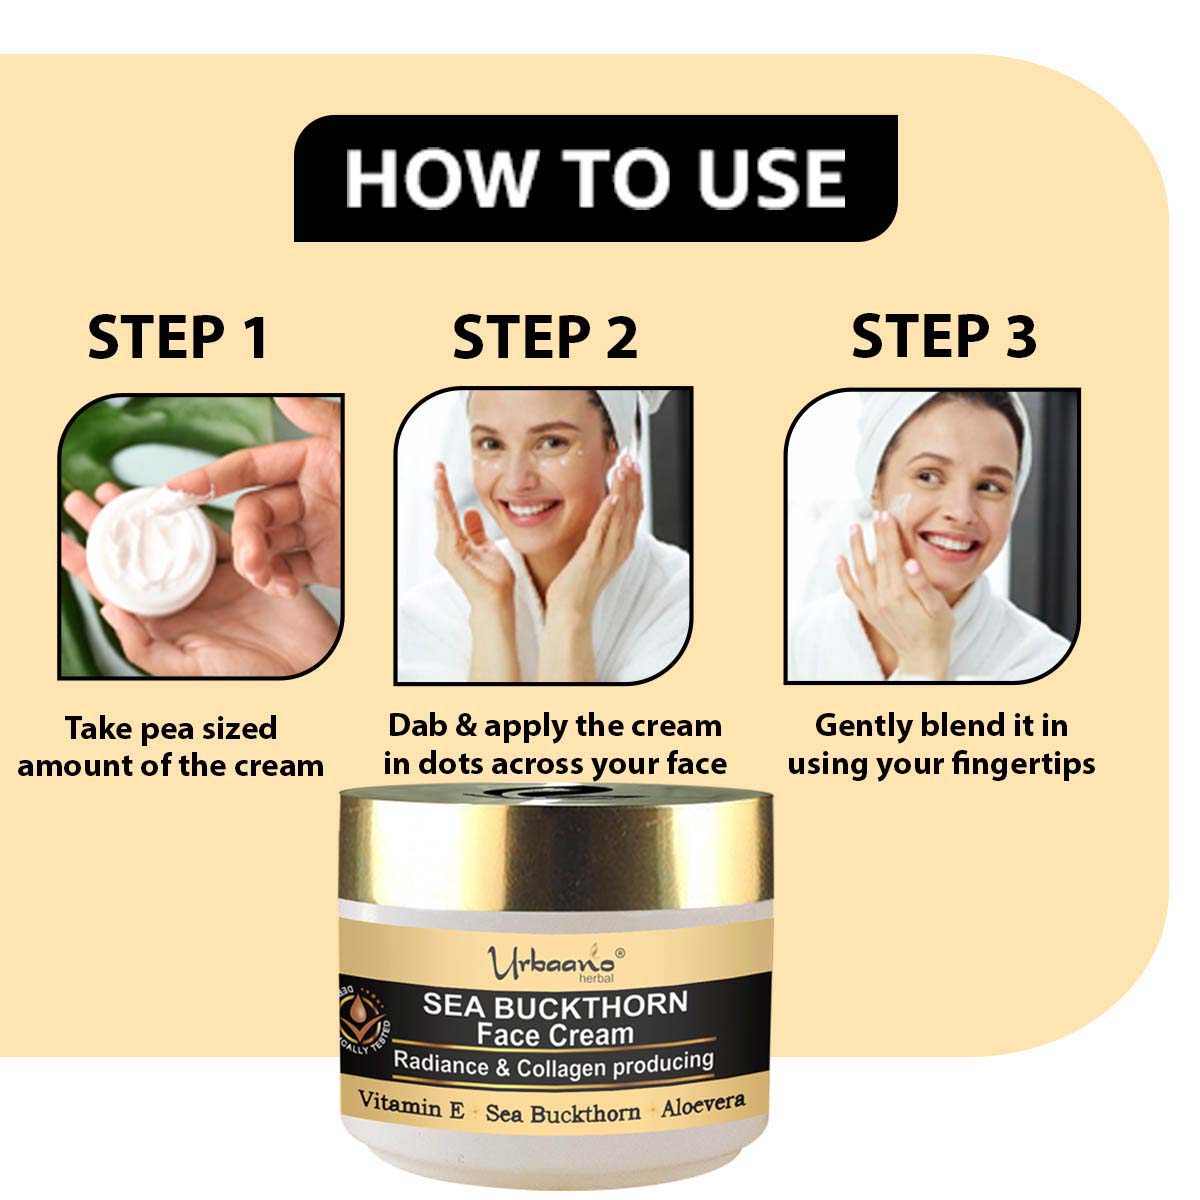 urbaano herbal sea buckthorn radiance & collagen boost face cream moisturizer non oily, easy for daily use